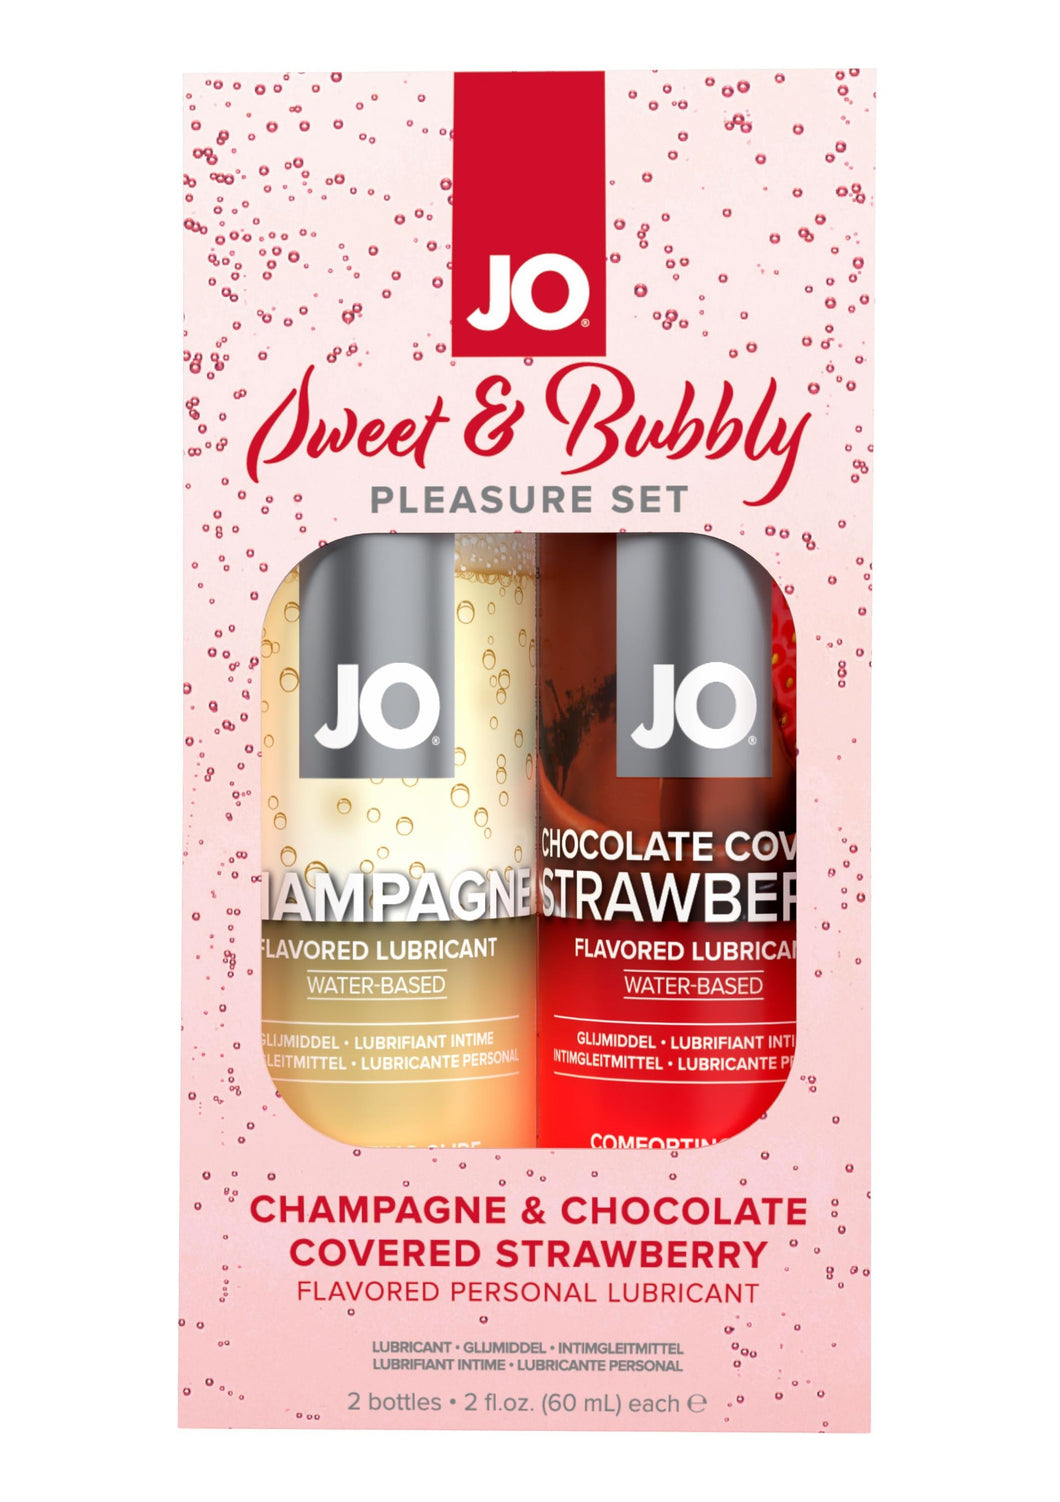 Jo Sweet & Bubbly Pleasure Set Champagne-chocolate Strawberry